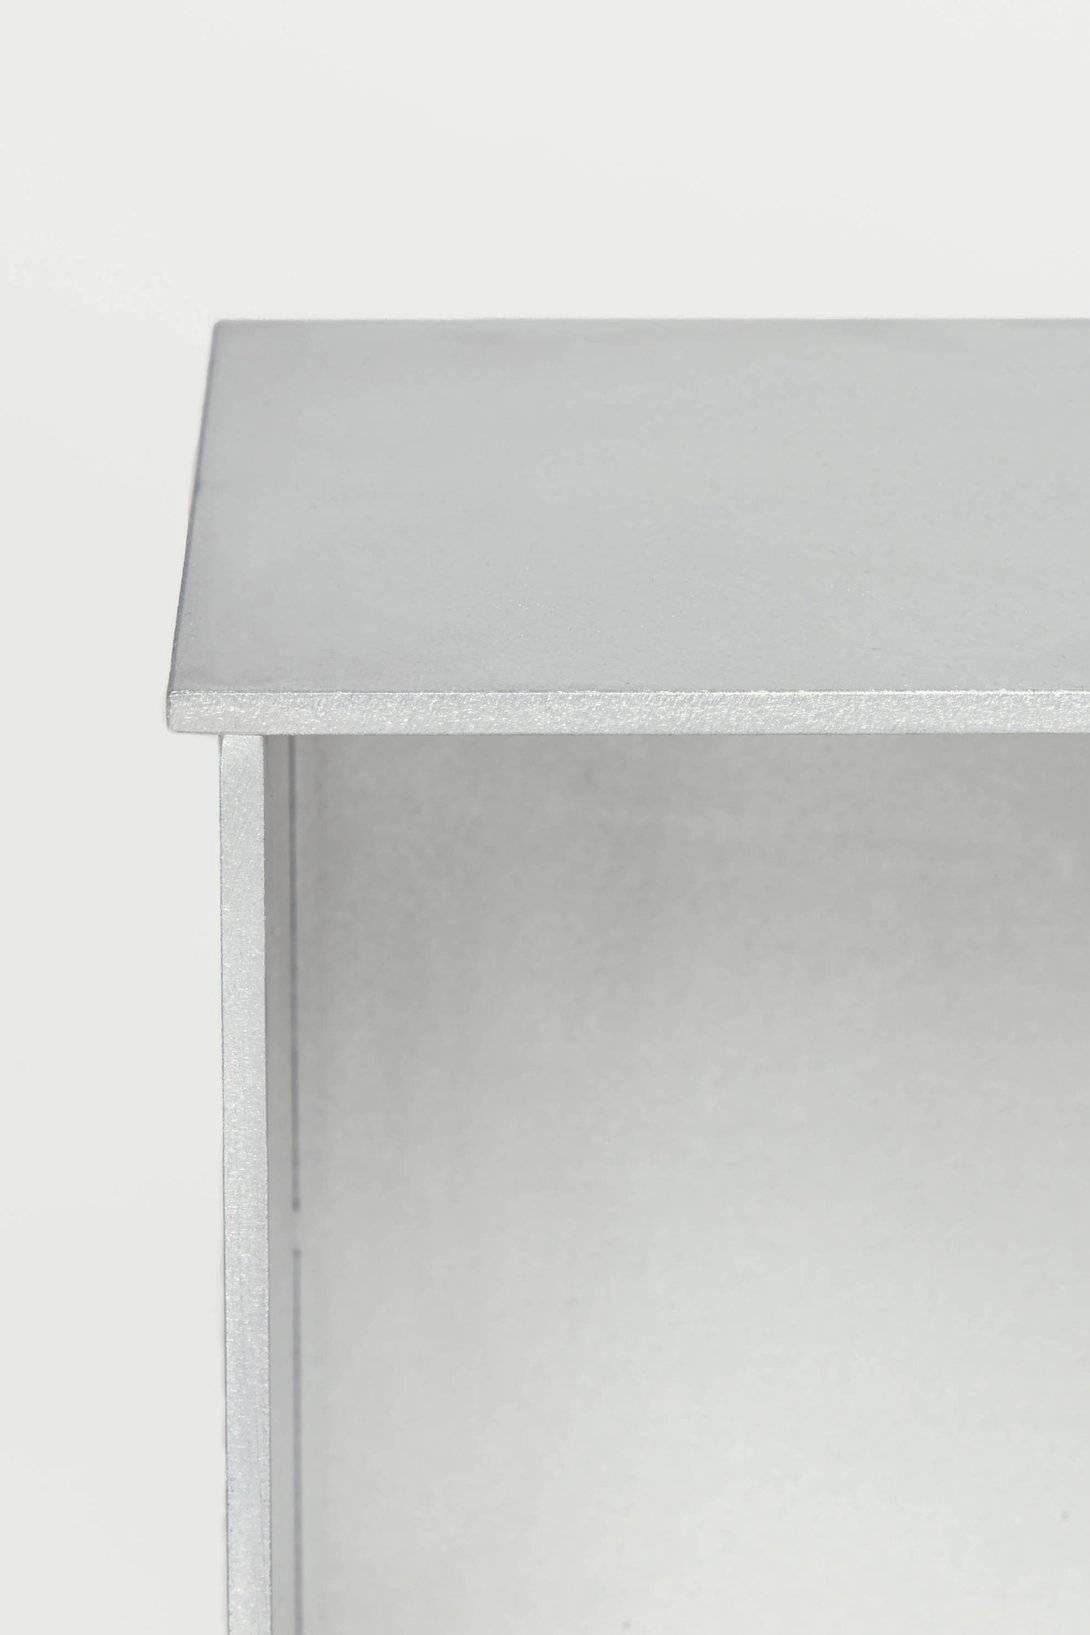 Minimalist 4G Wall-Mounted Shelf in Waxed Aluminum Plate by Jonathan Nesci